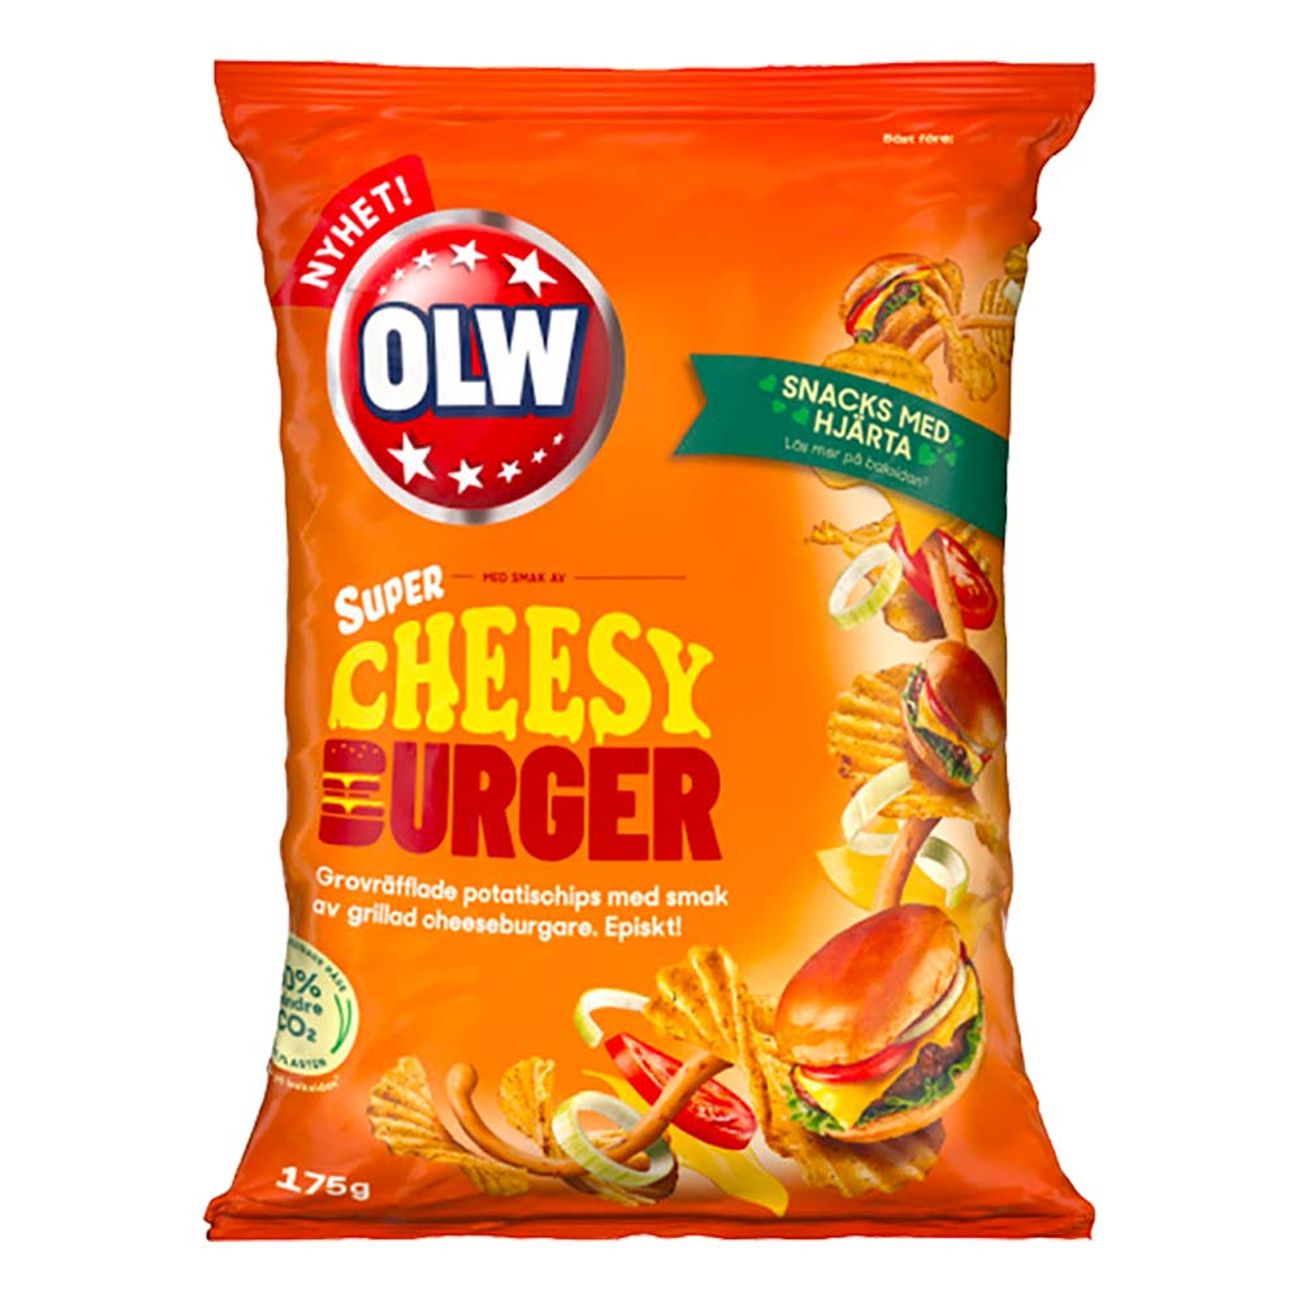 olw-cheesy-burger-chips-92721-1